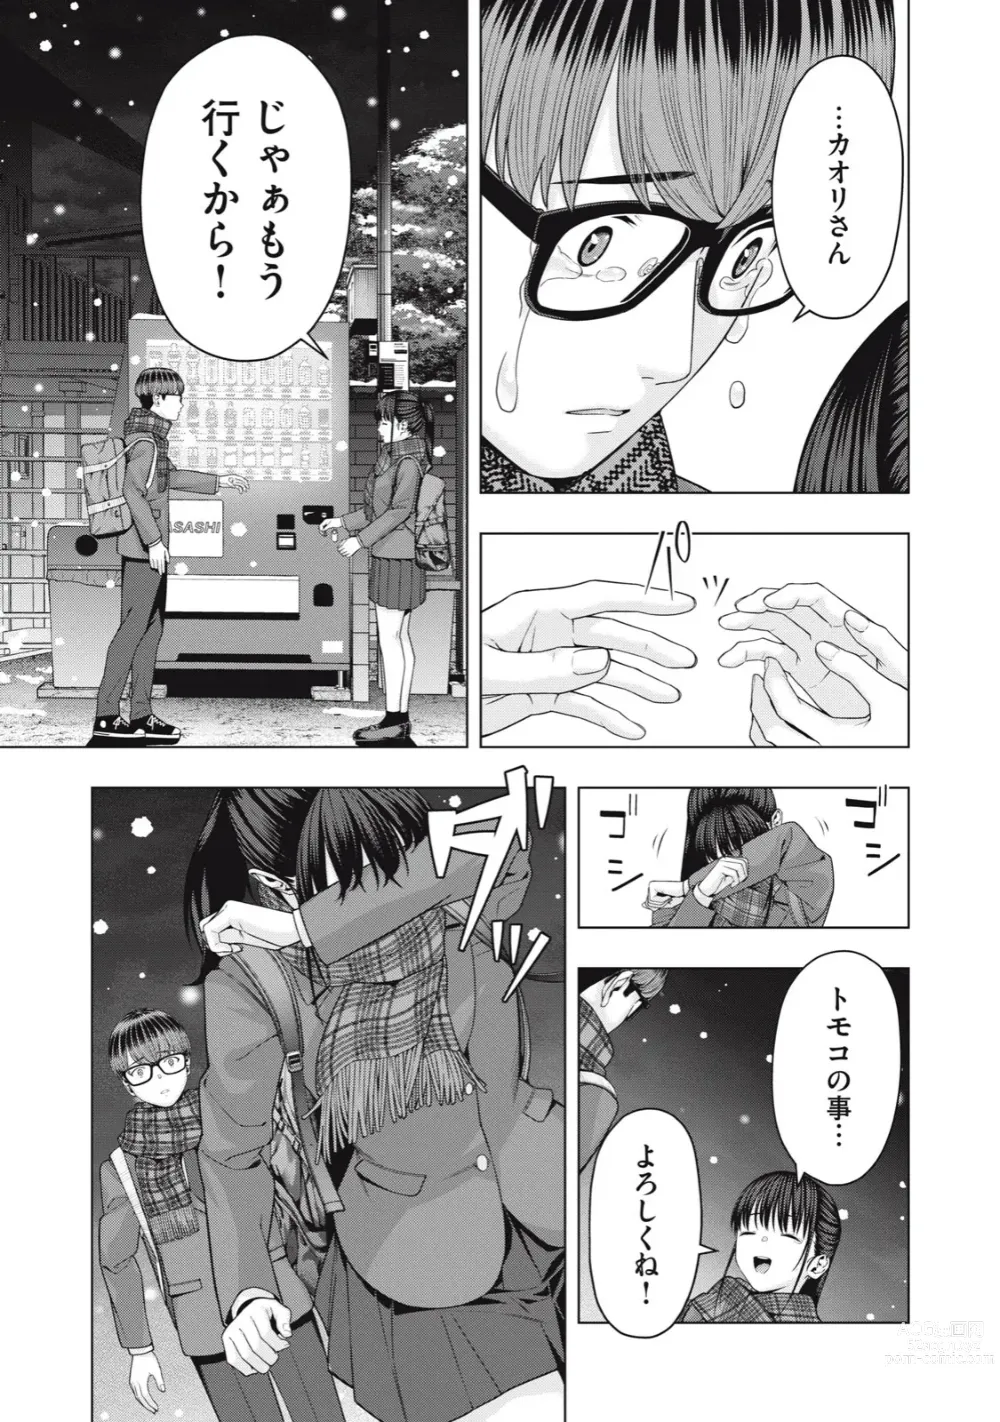 Page 585 of manga Kanojo no Tomodachi